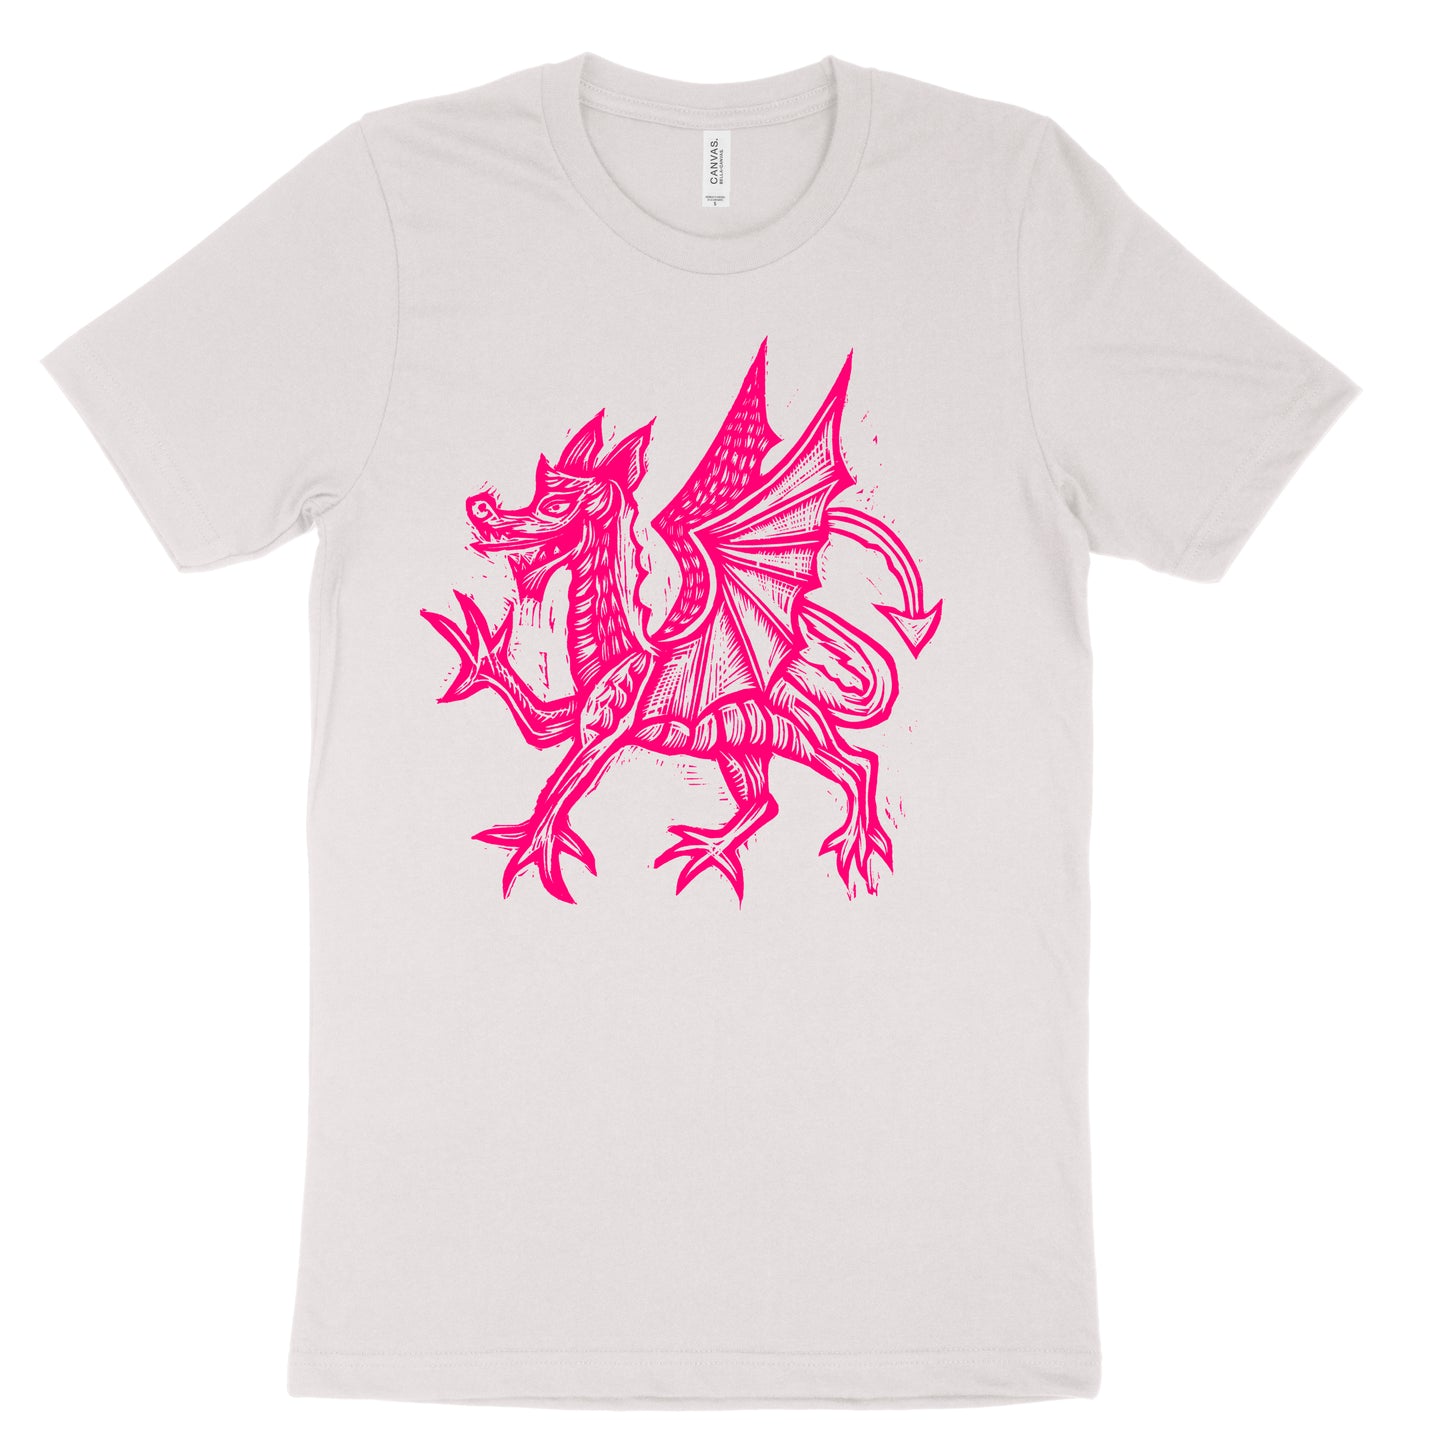 Welsh Dragon Woodcut Printed T-Shirt